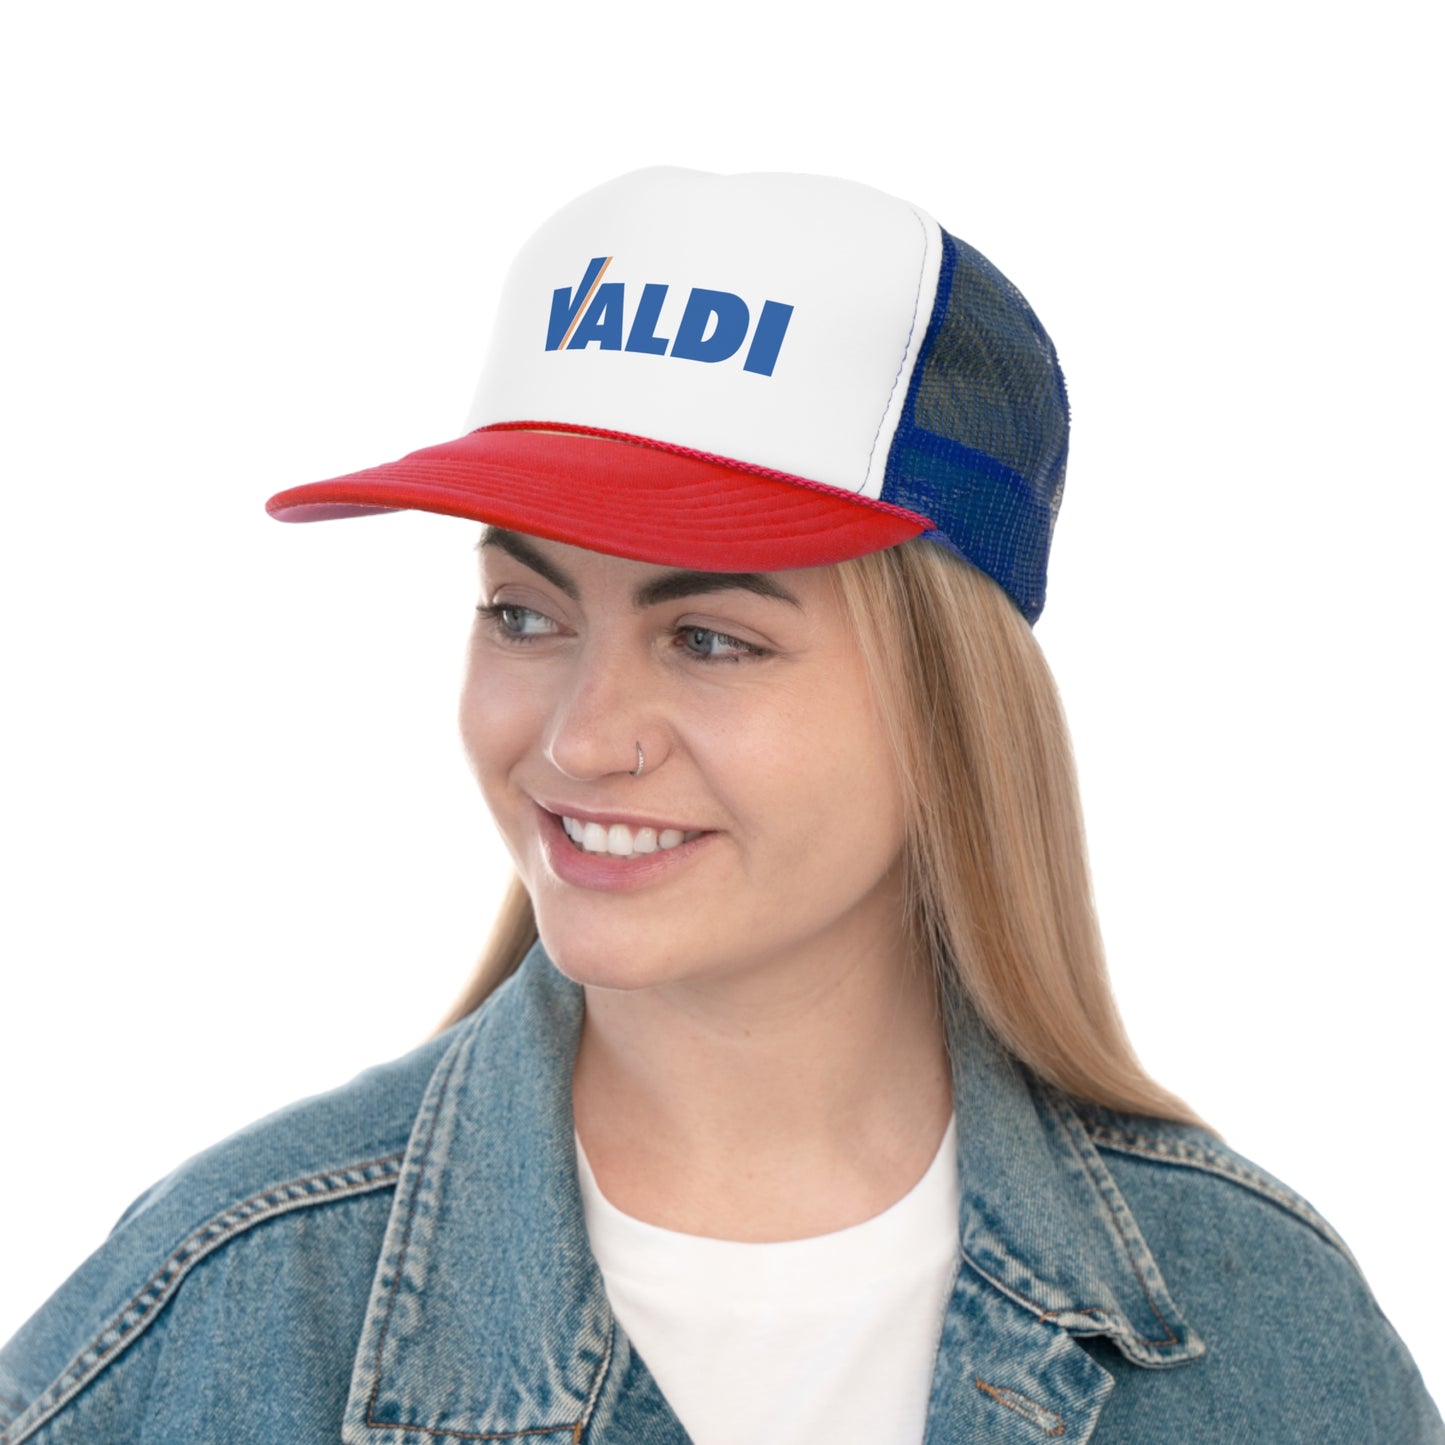 Valdi Grocery Store Canadian Nostalgia Trucker Cap